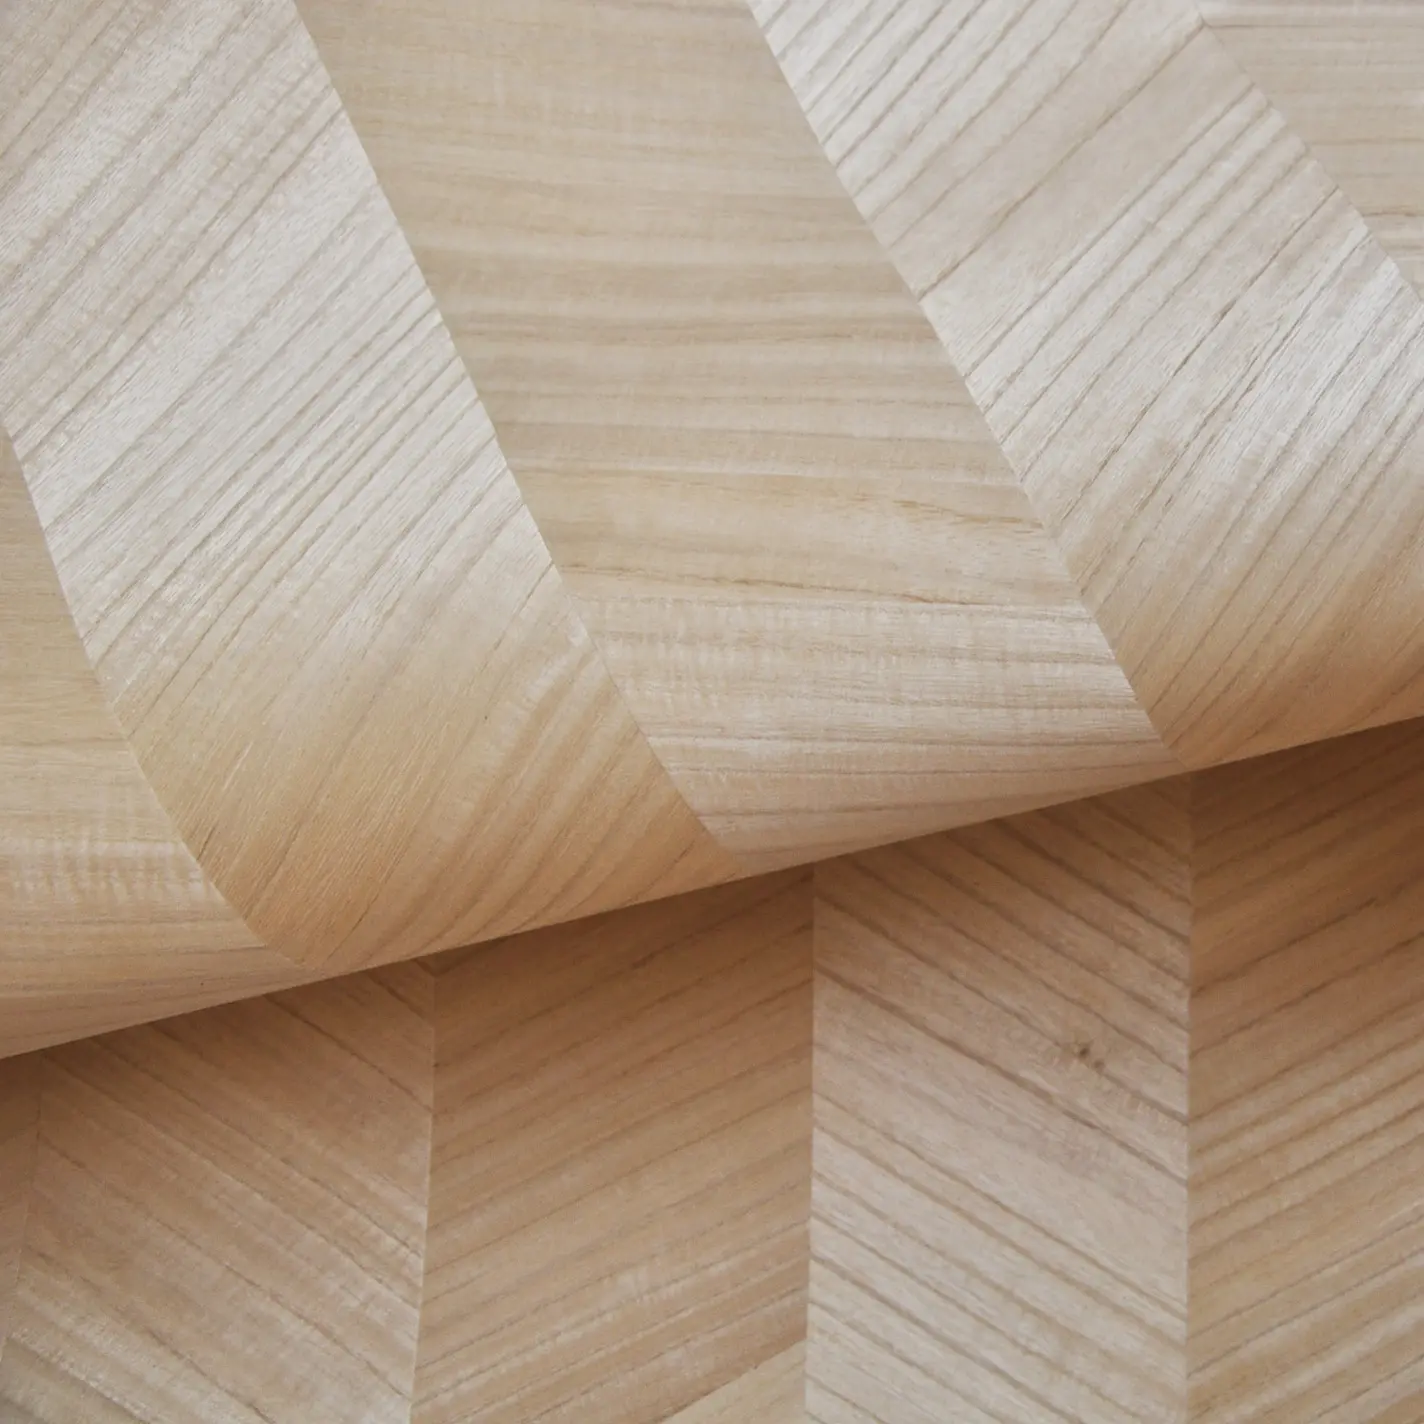 2021 MY WIND new designs Real Wood Veneer wallcoverings Handmade natural organic Wallpaper For Modern Interior Decor